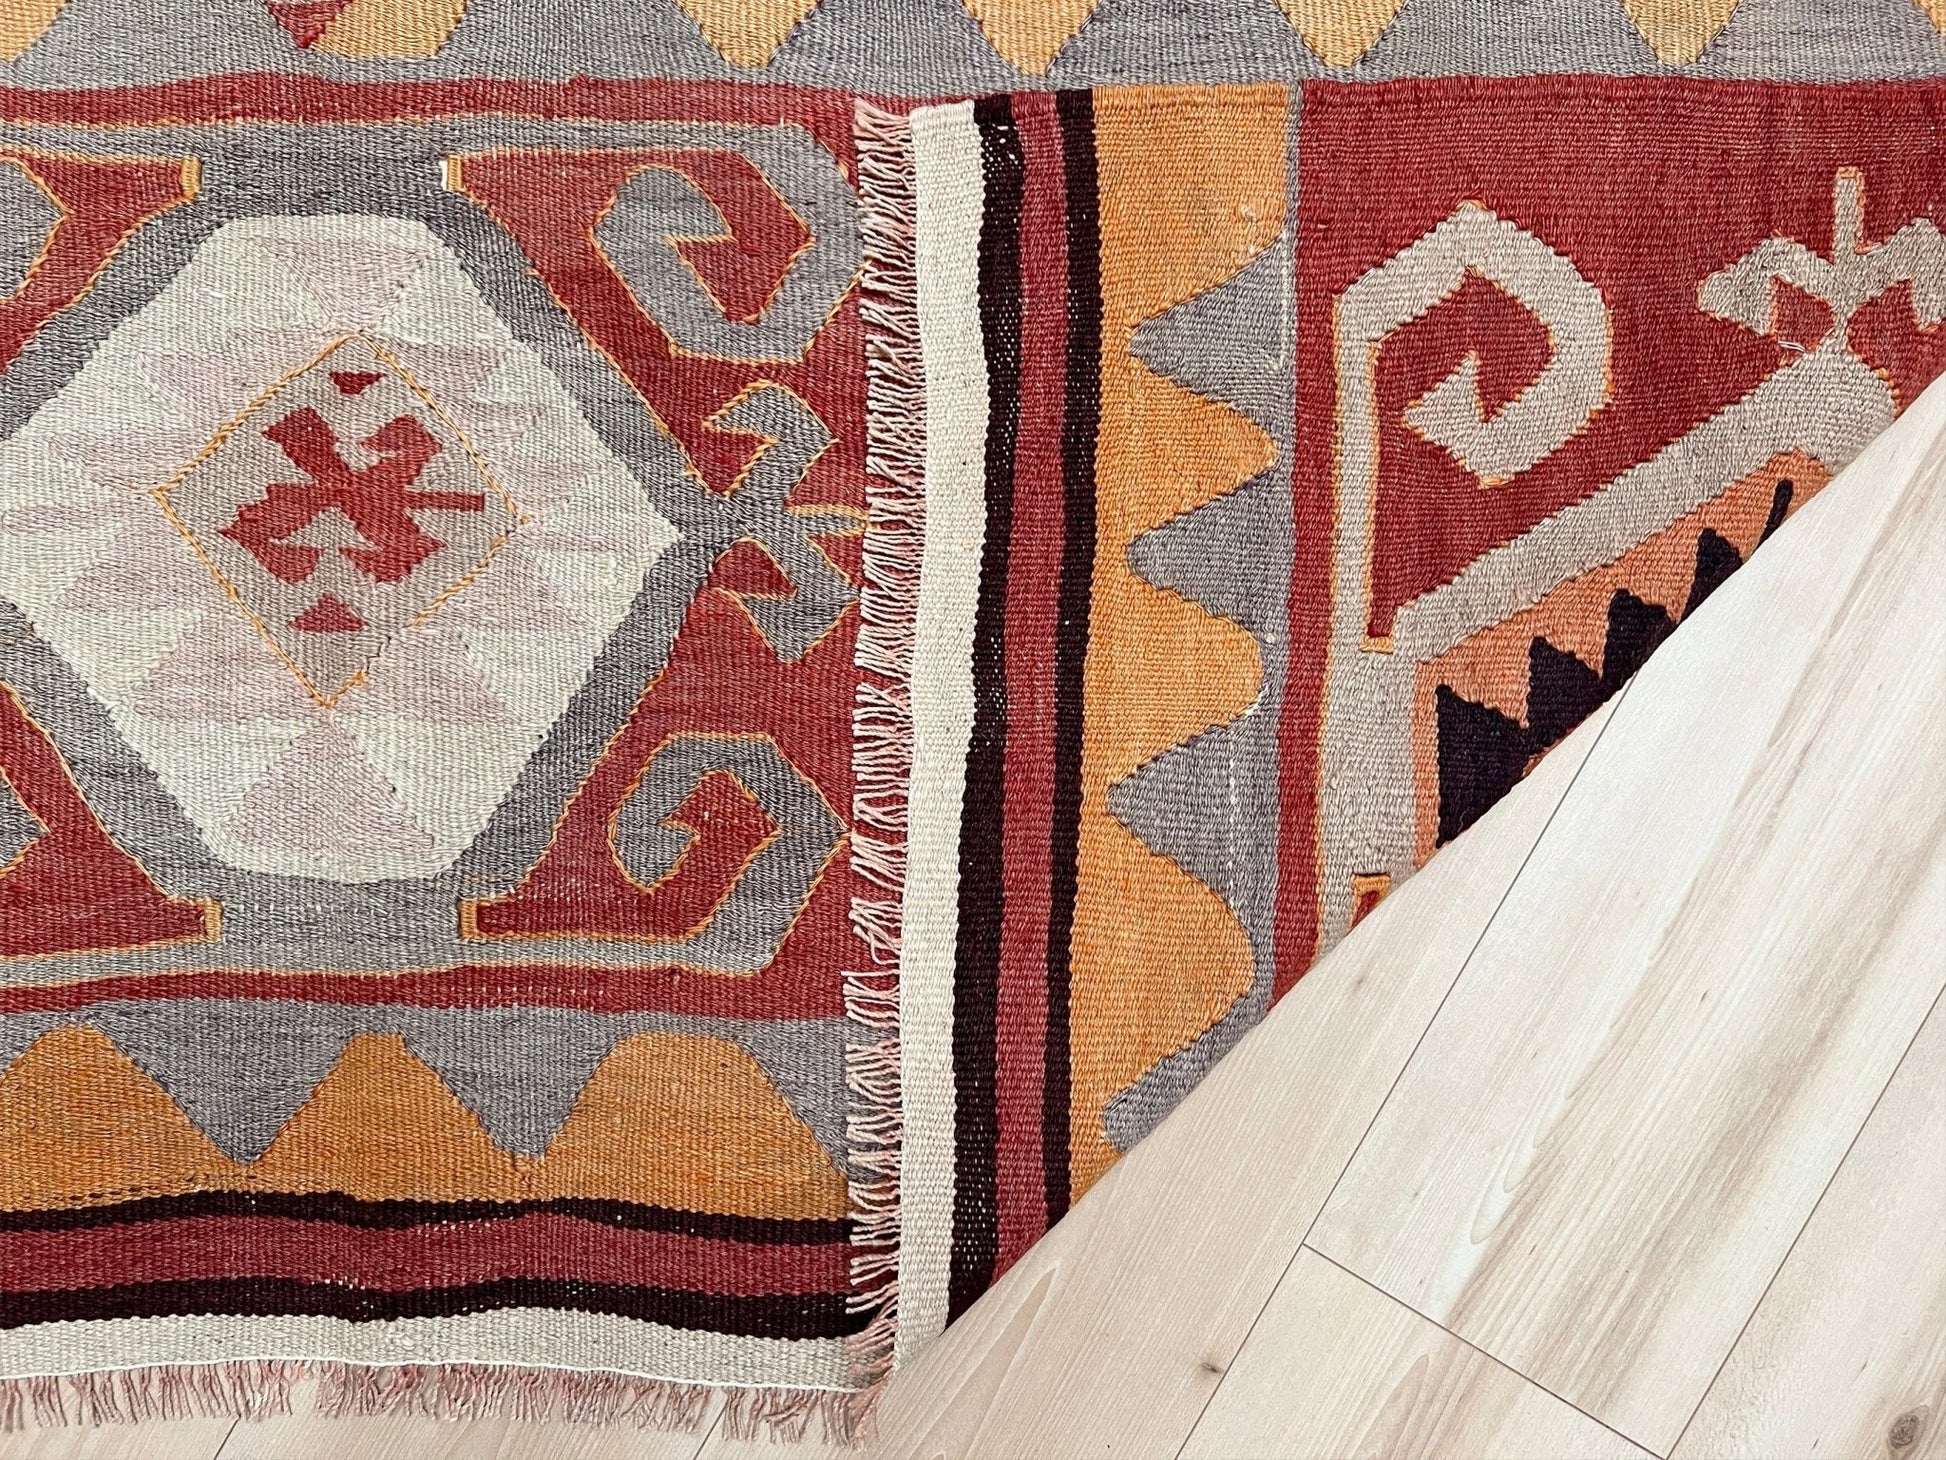 Kayseri Turkish kilim rug shop san francisco bay area. Handmade wool flatweave rug. Buy tribal navajo  style rug online.